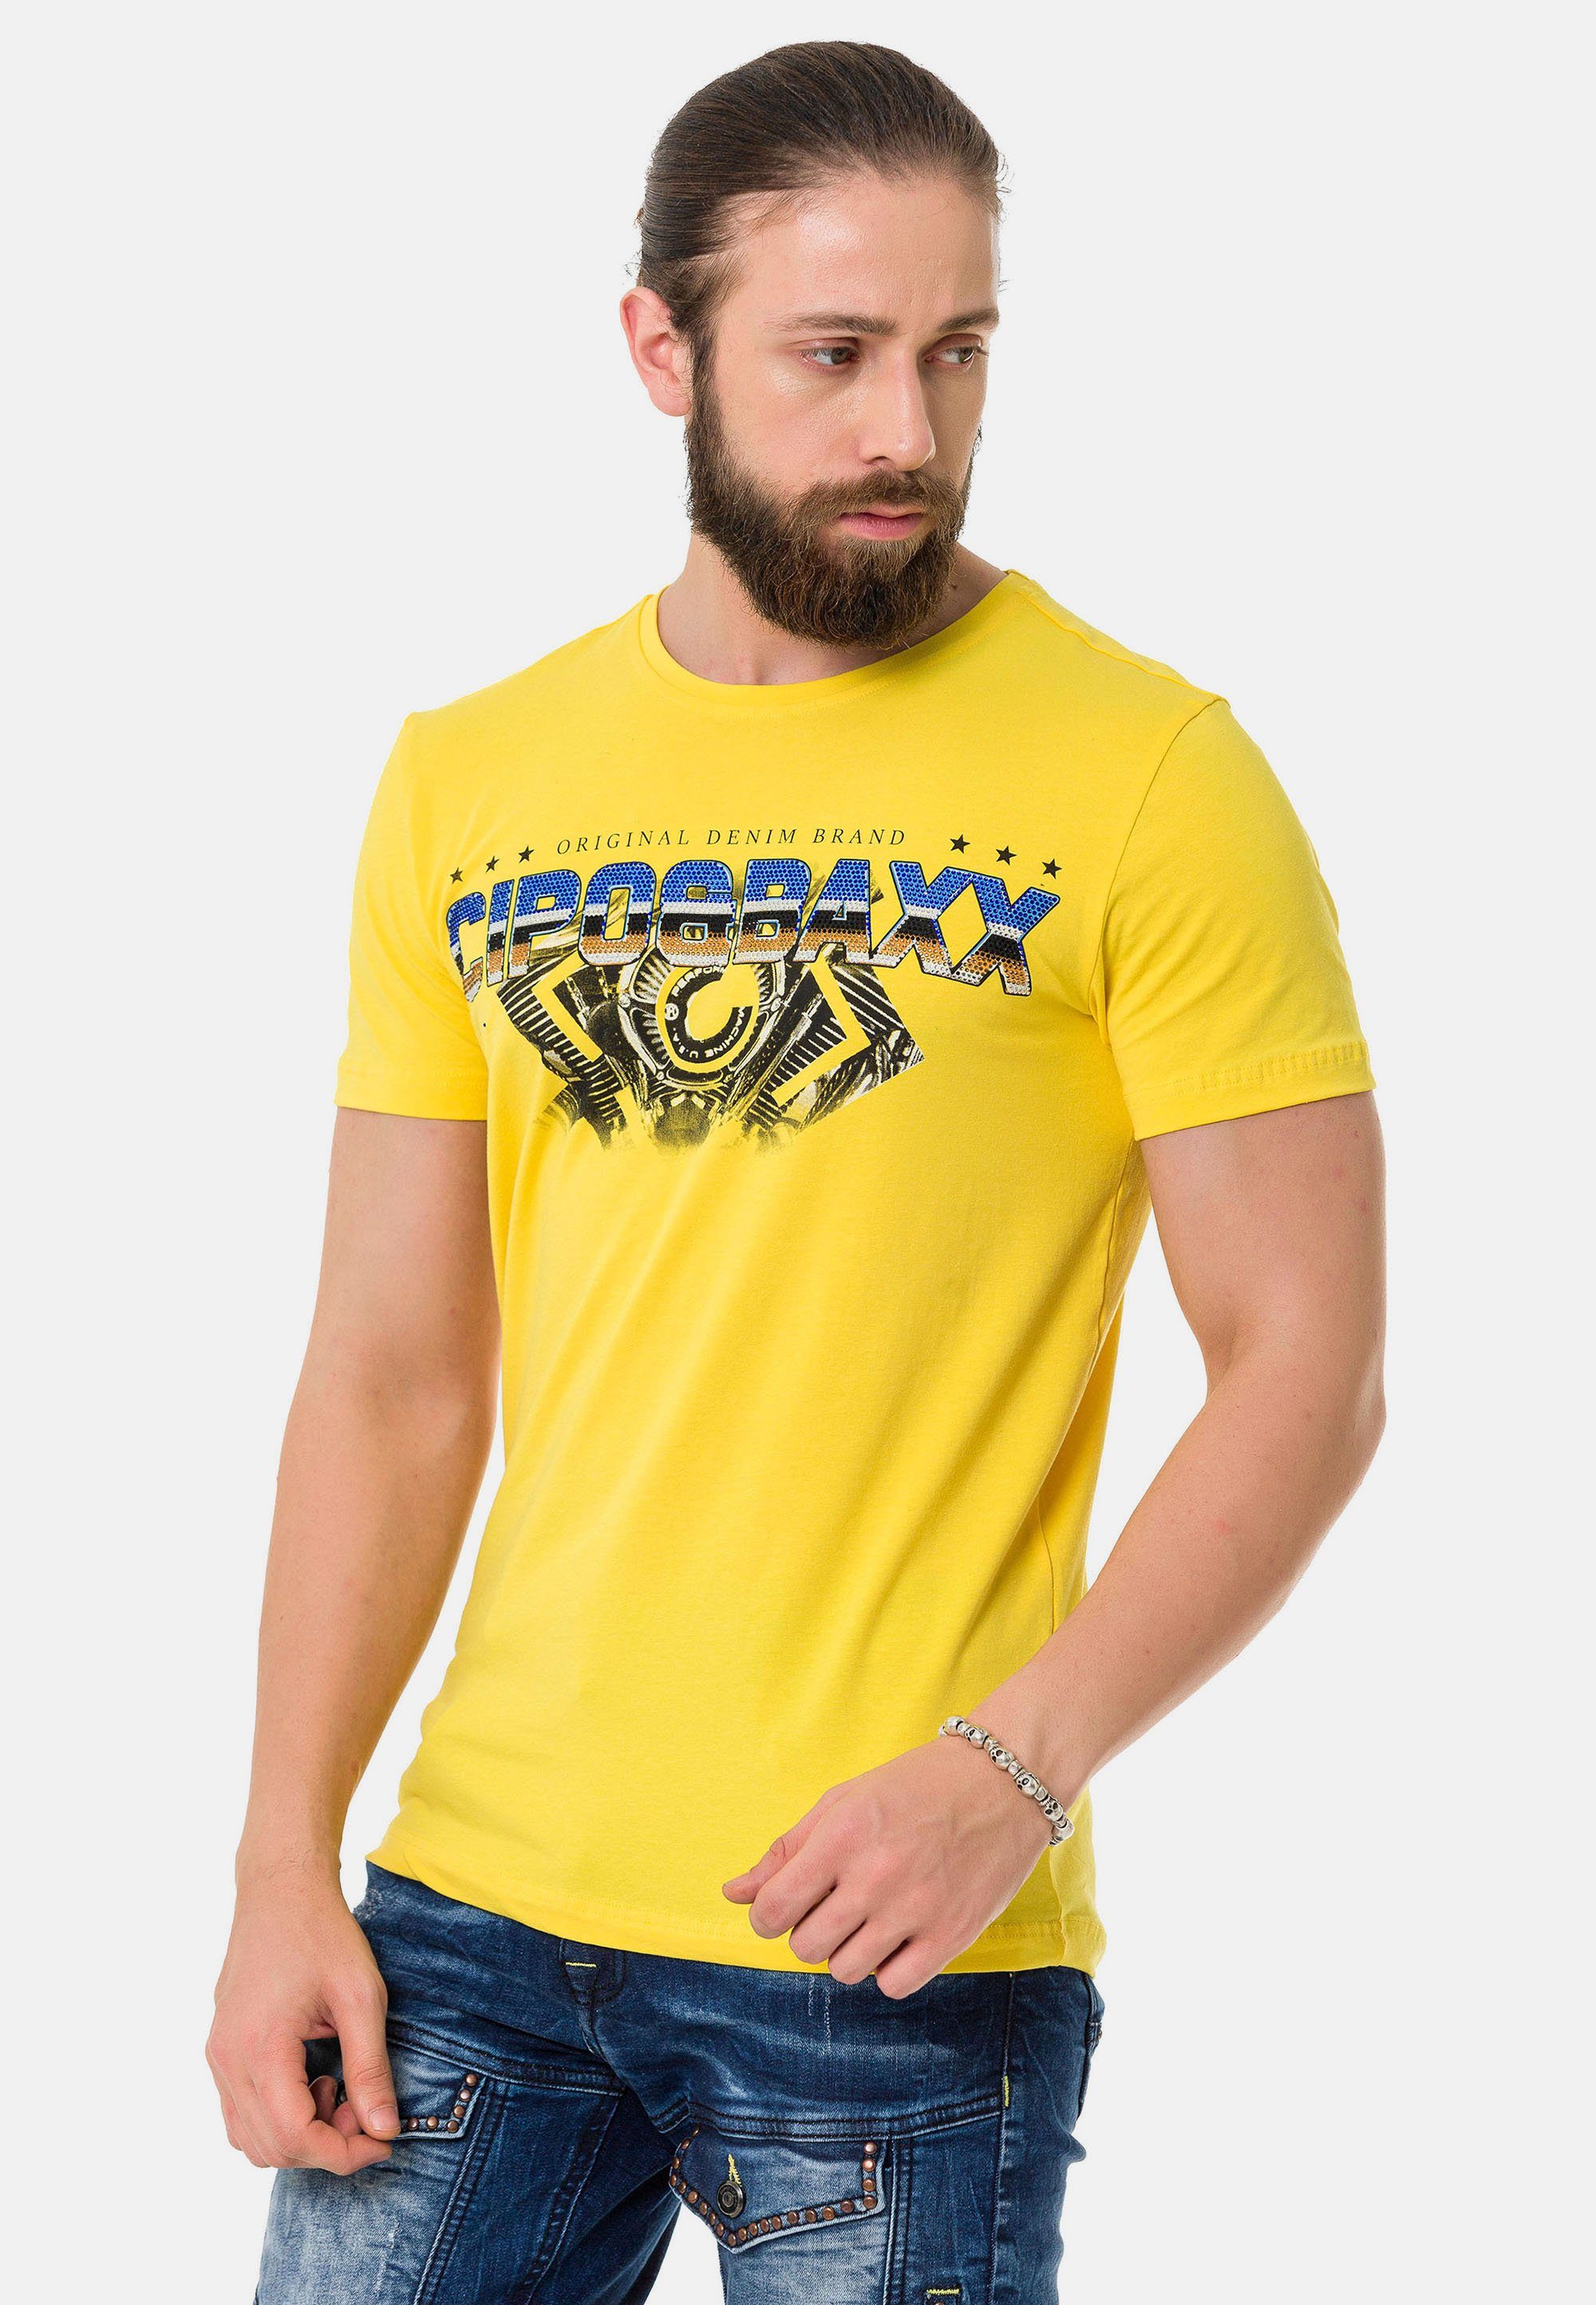 Cipo & Baxx gelb Marken-Schriftzug trendigem T-Shirt mit